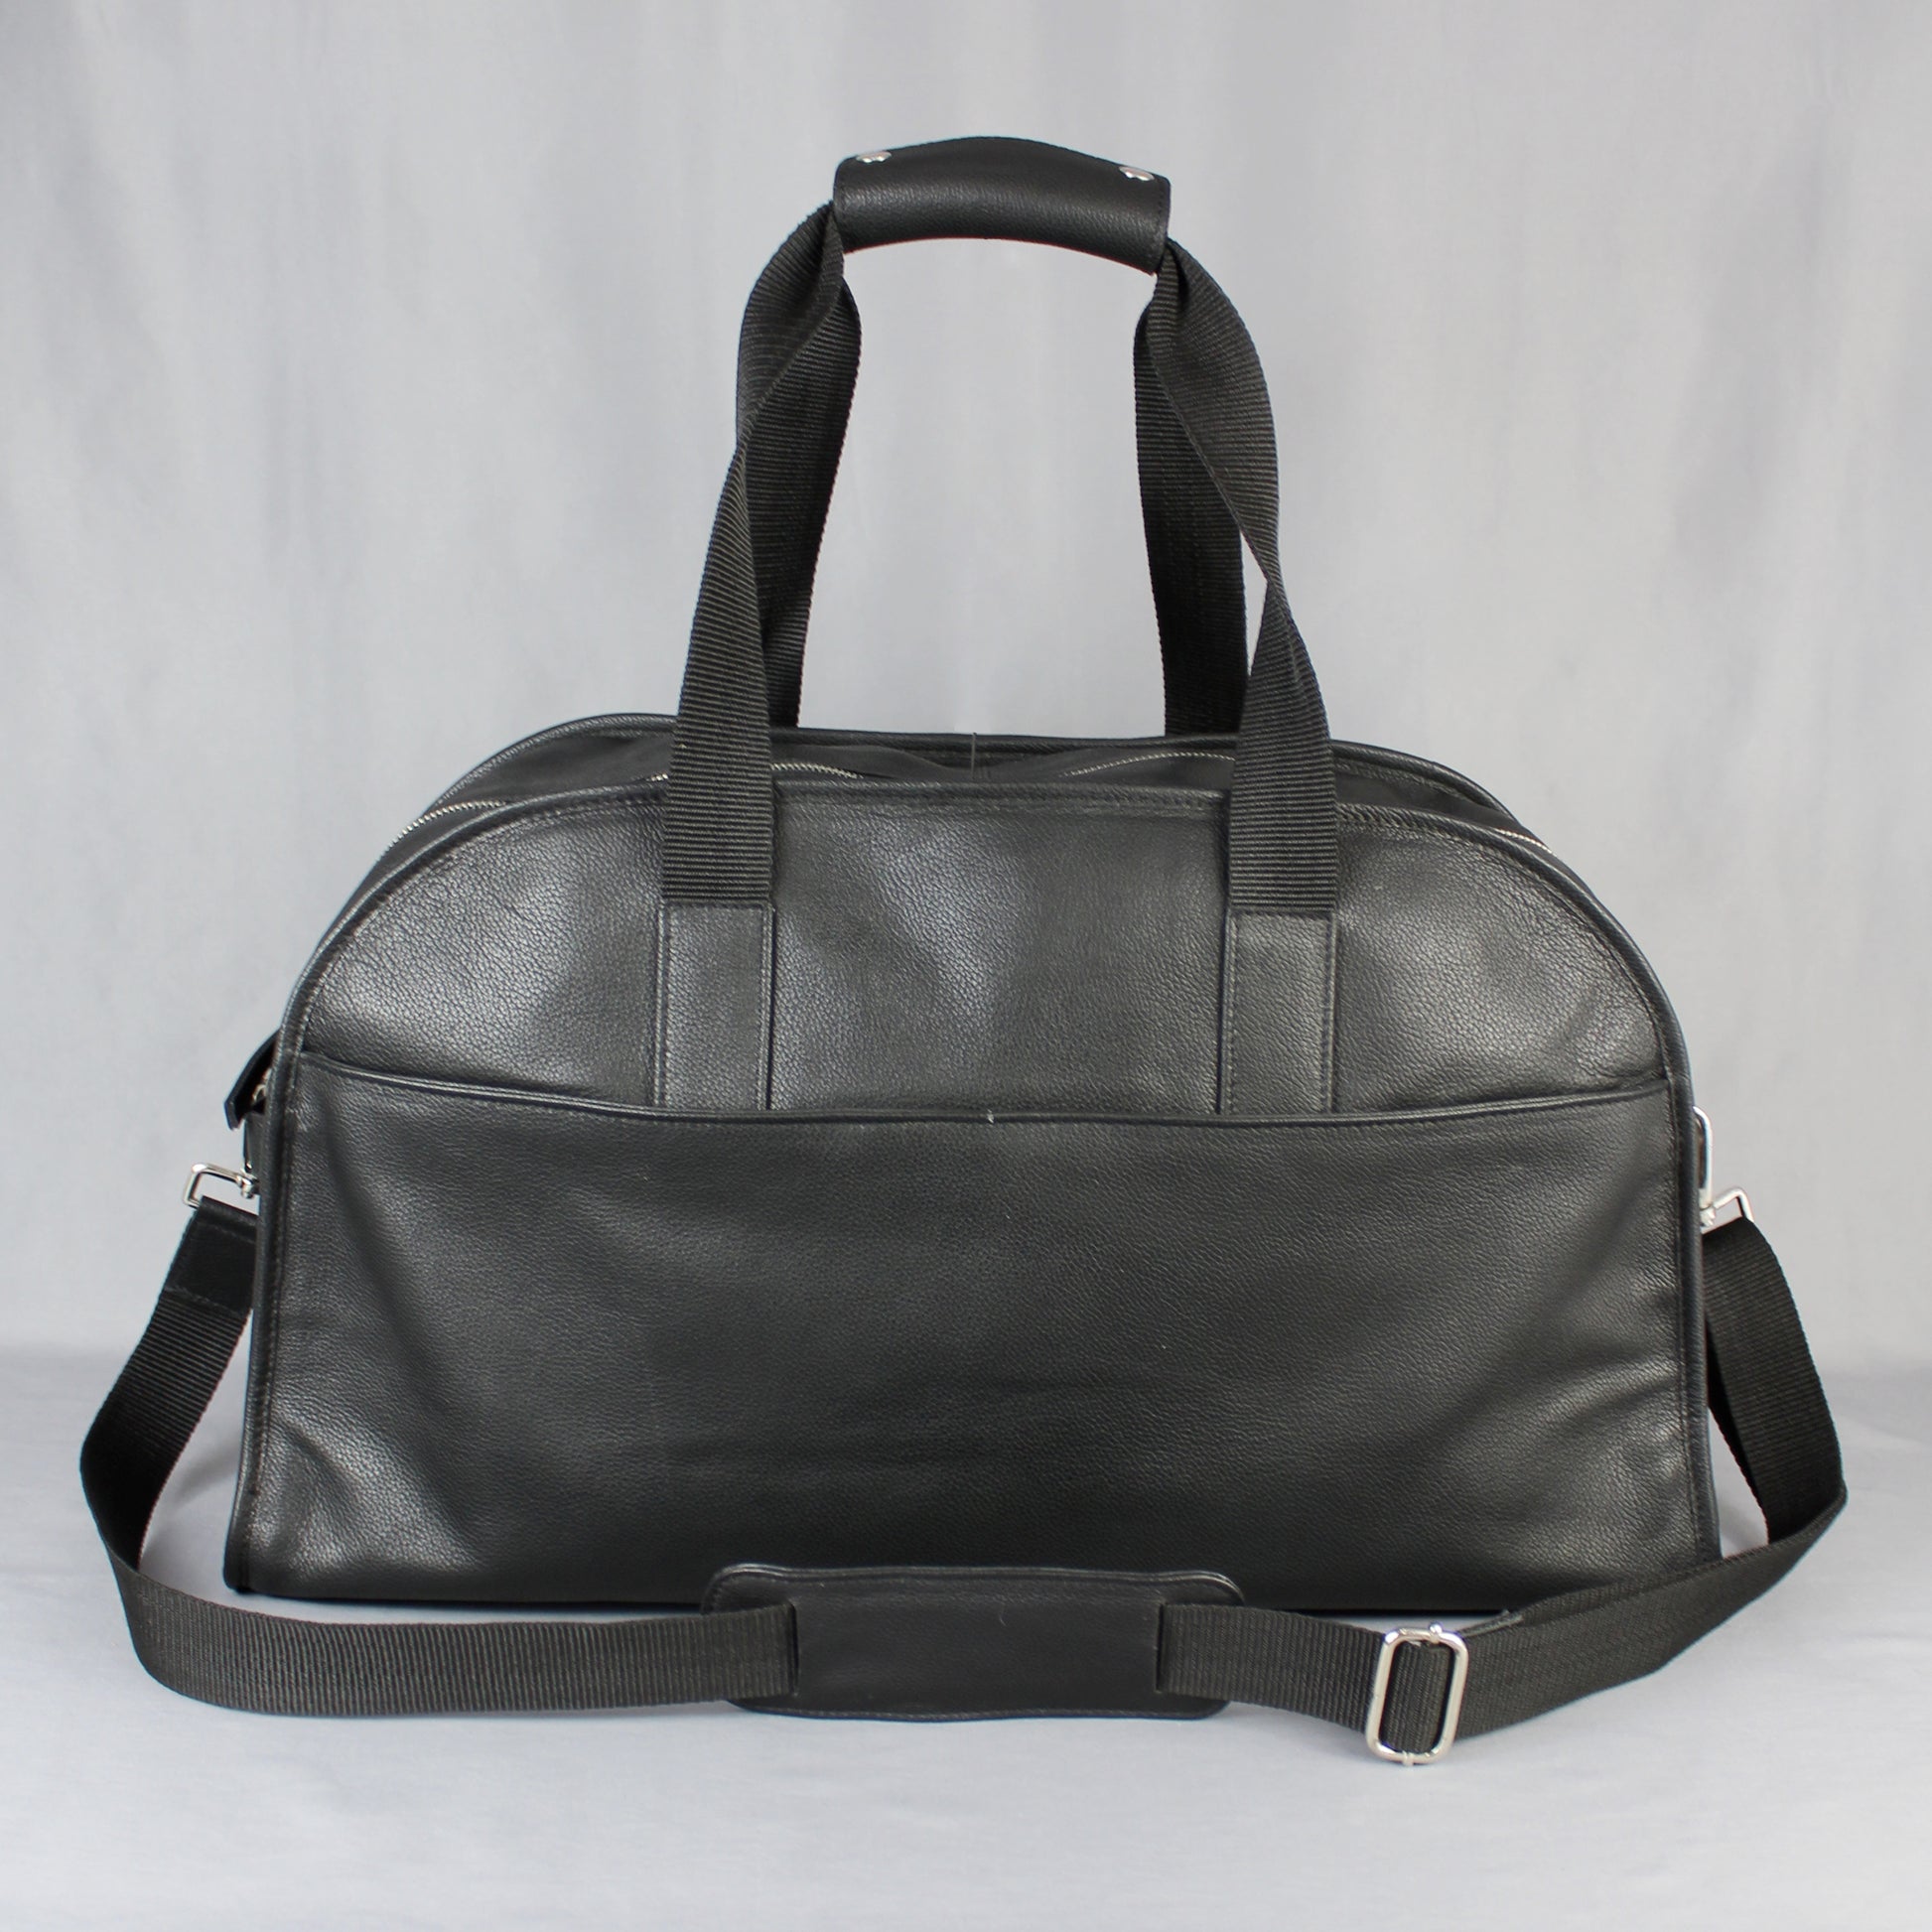 Black Leather Crossbody Sling Bag With Gunmetal Zip, LeatherCo.